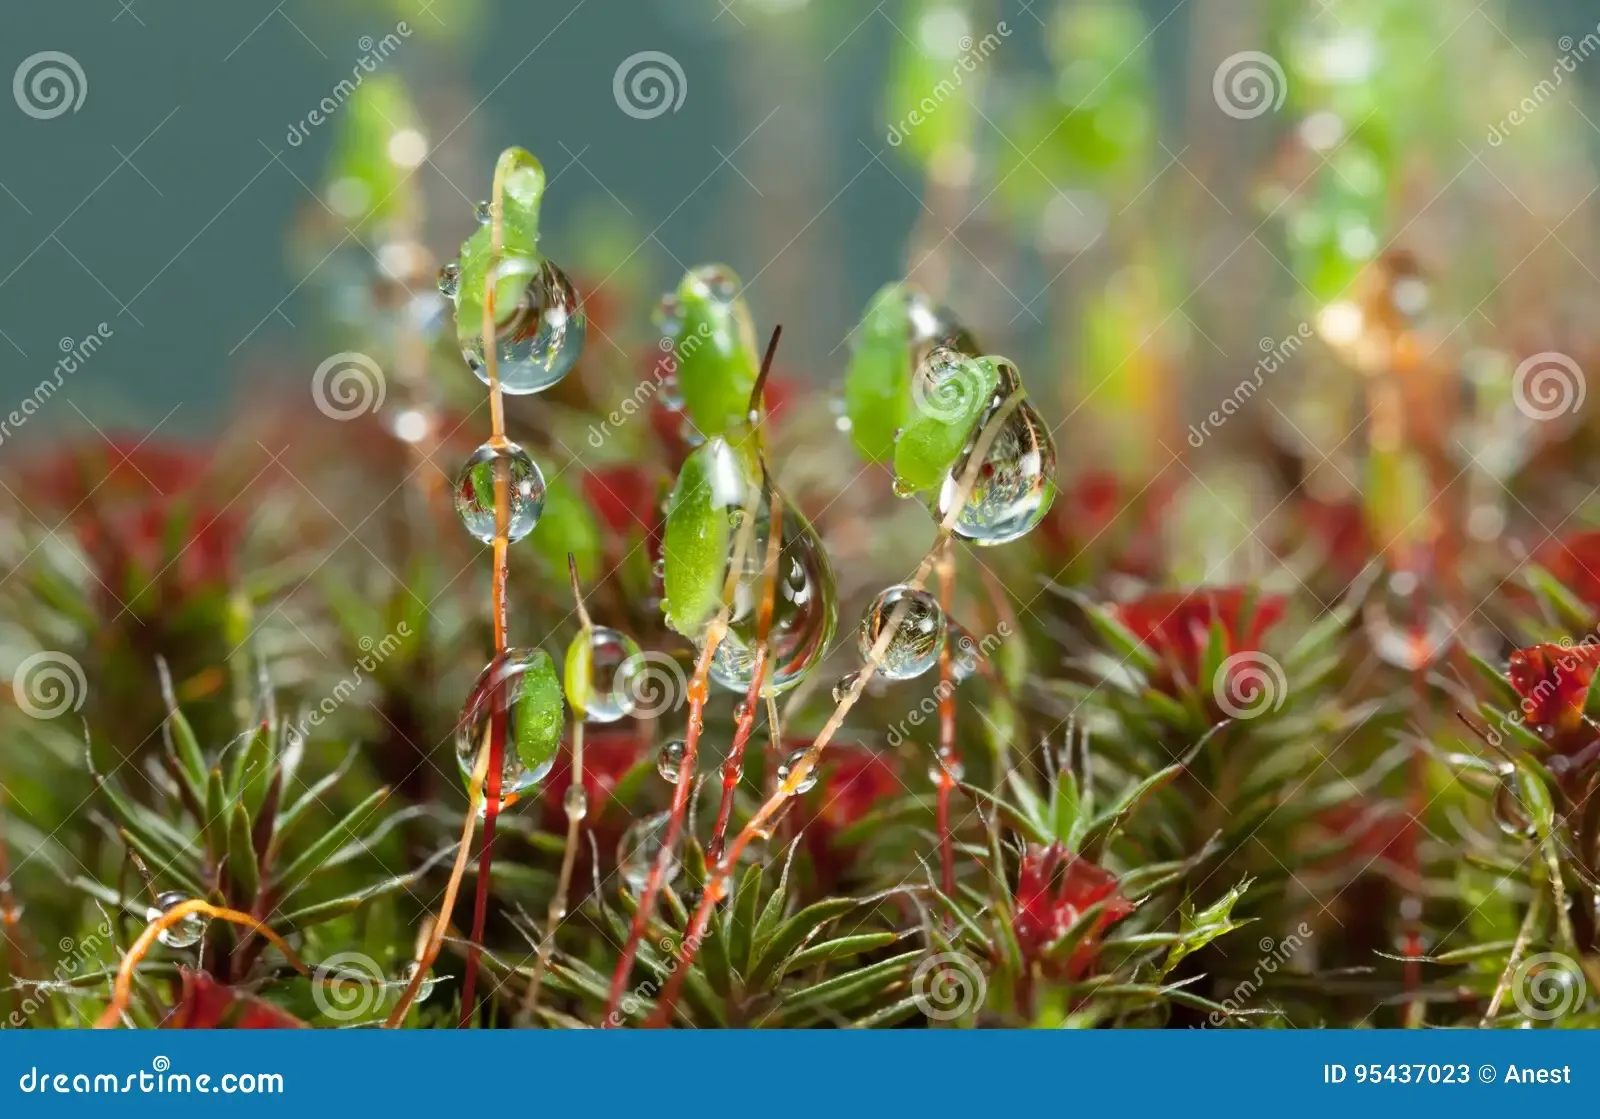 rain-drops-pohlia-haircap-moss-macro-low-point-view-nutans-green-spore-capsules-red-blossom-polytrichum-95437023.jpg